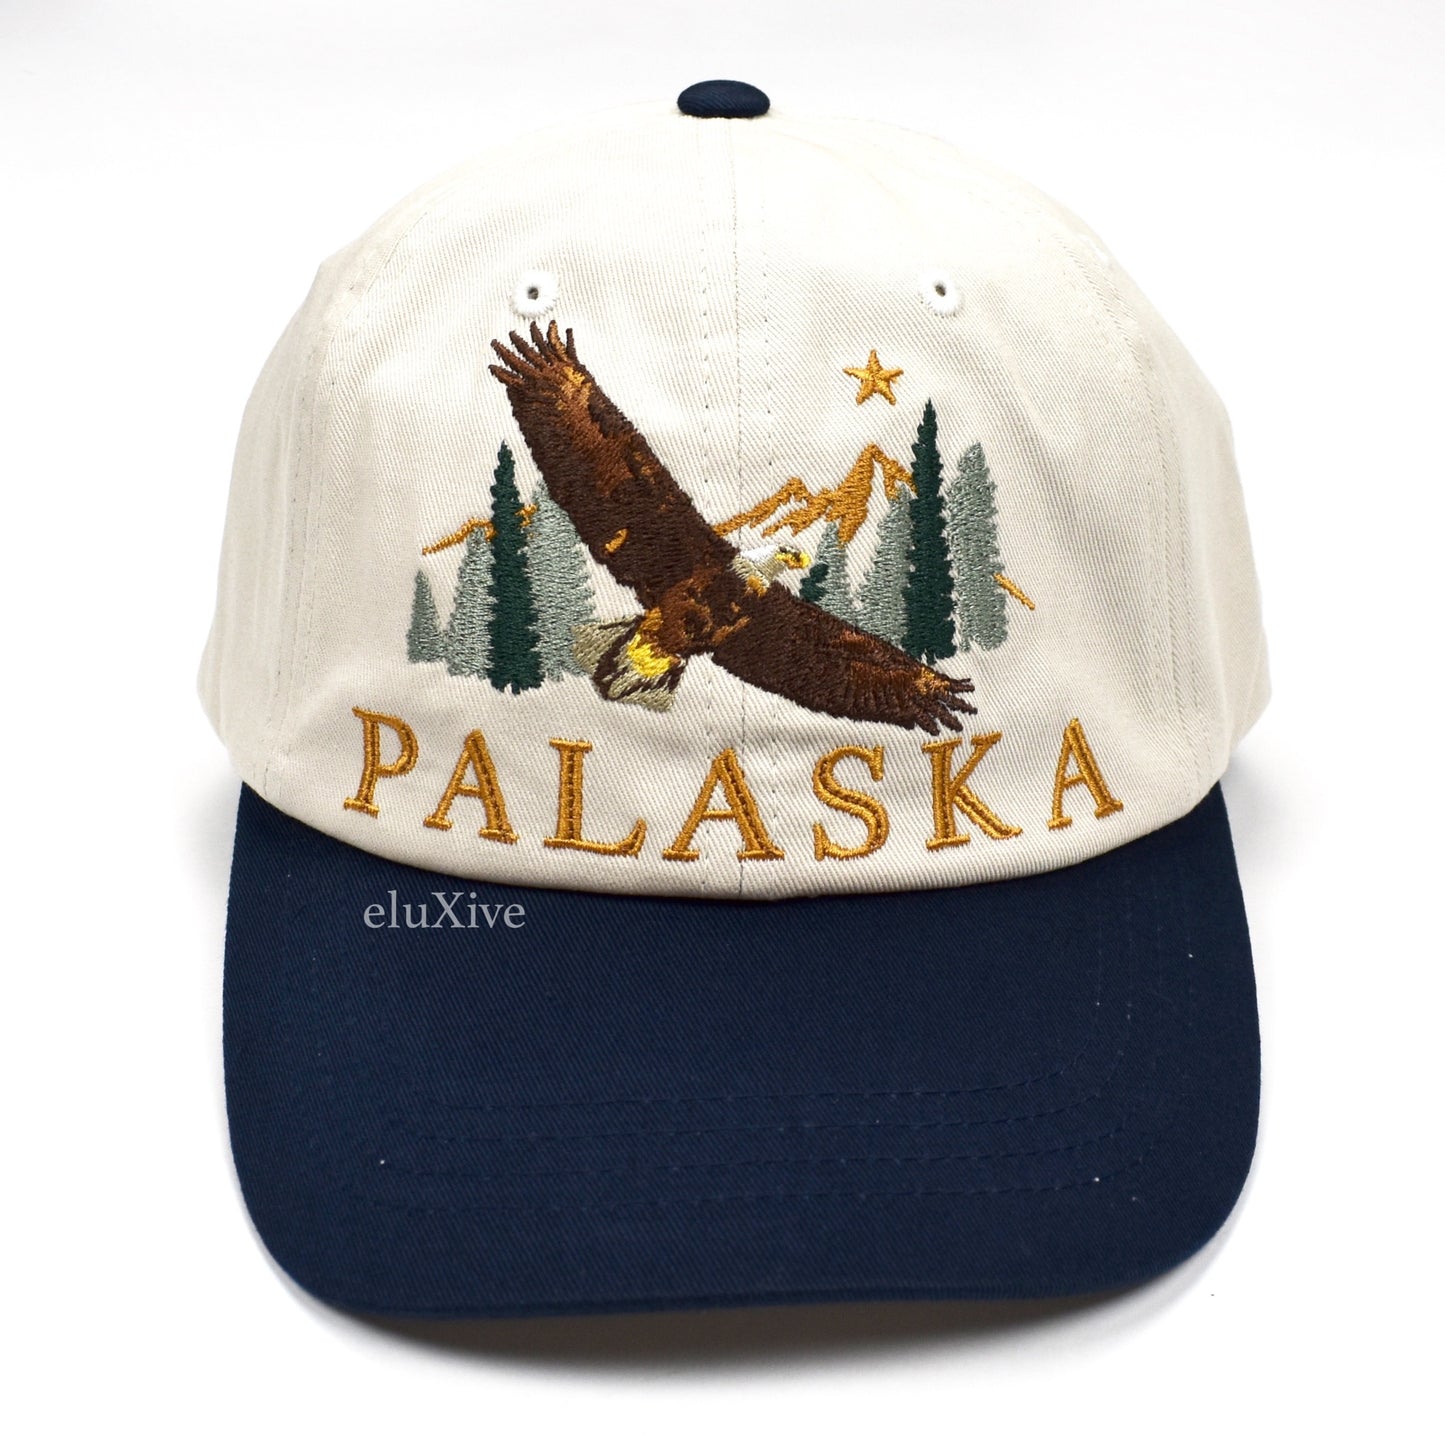 Palace - Palaska Logo Hat (Beige)